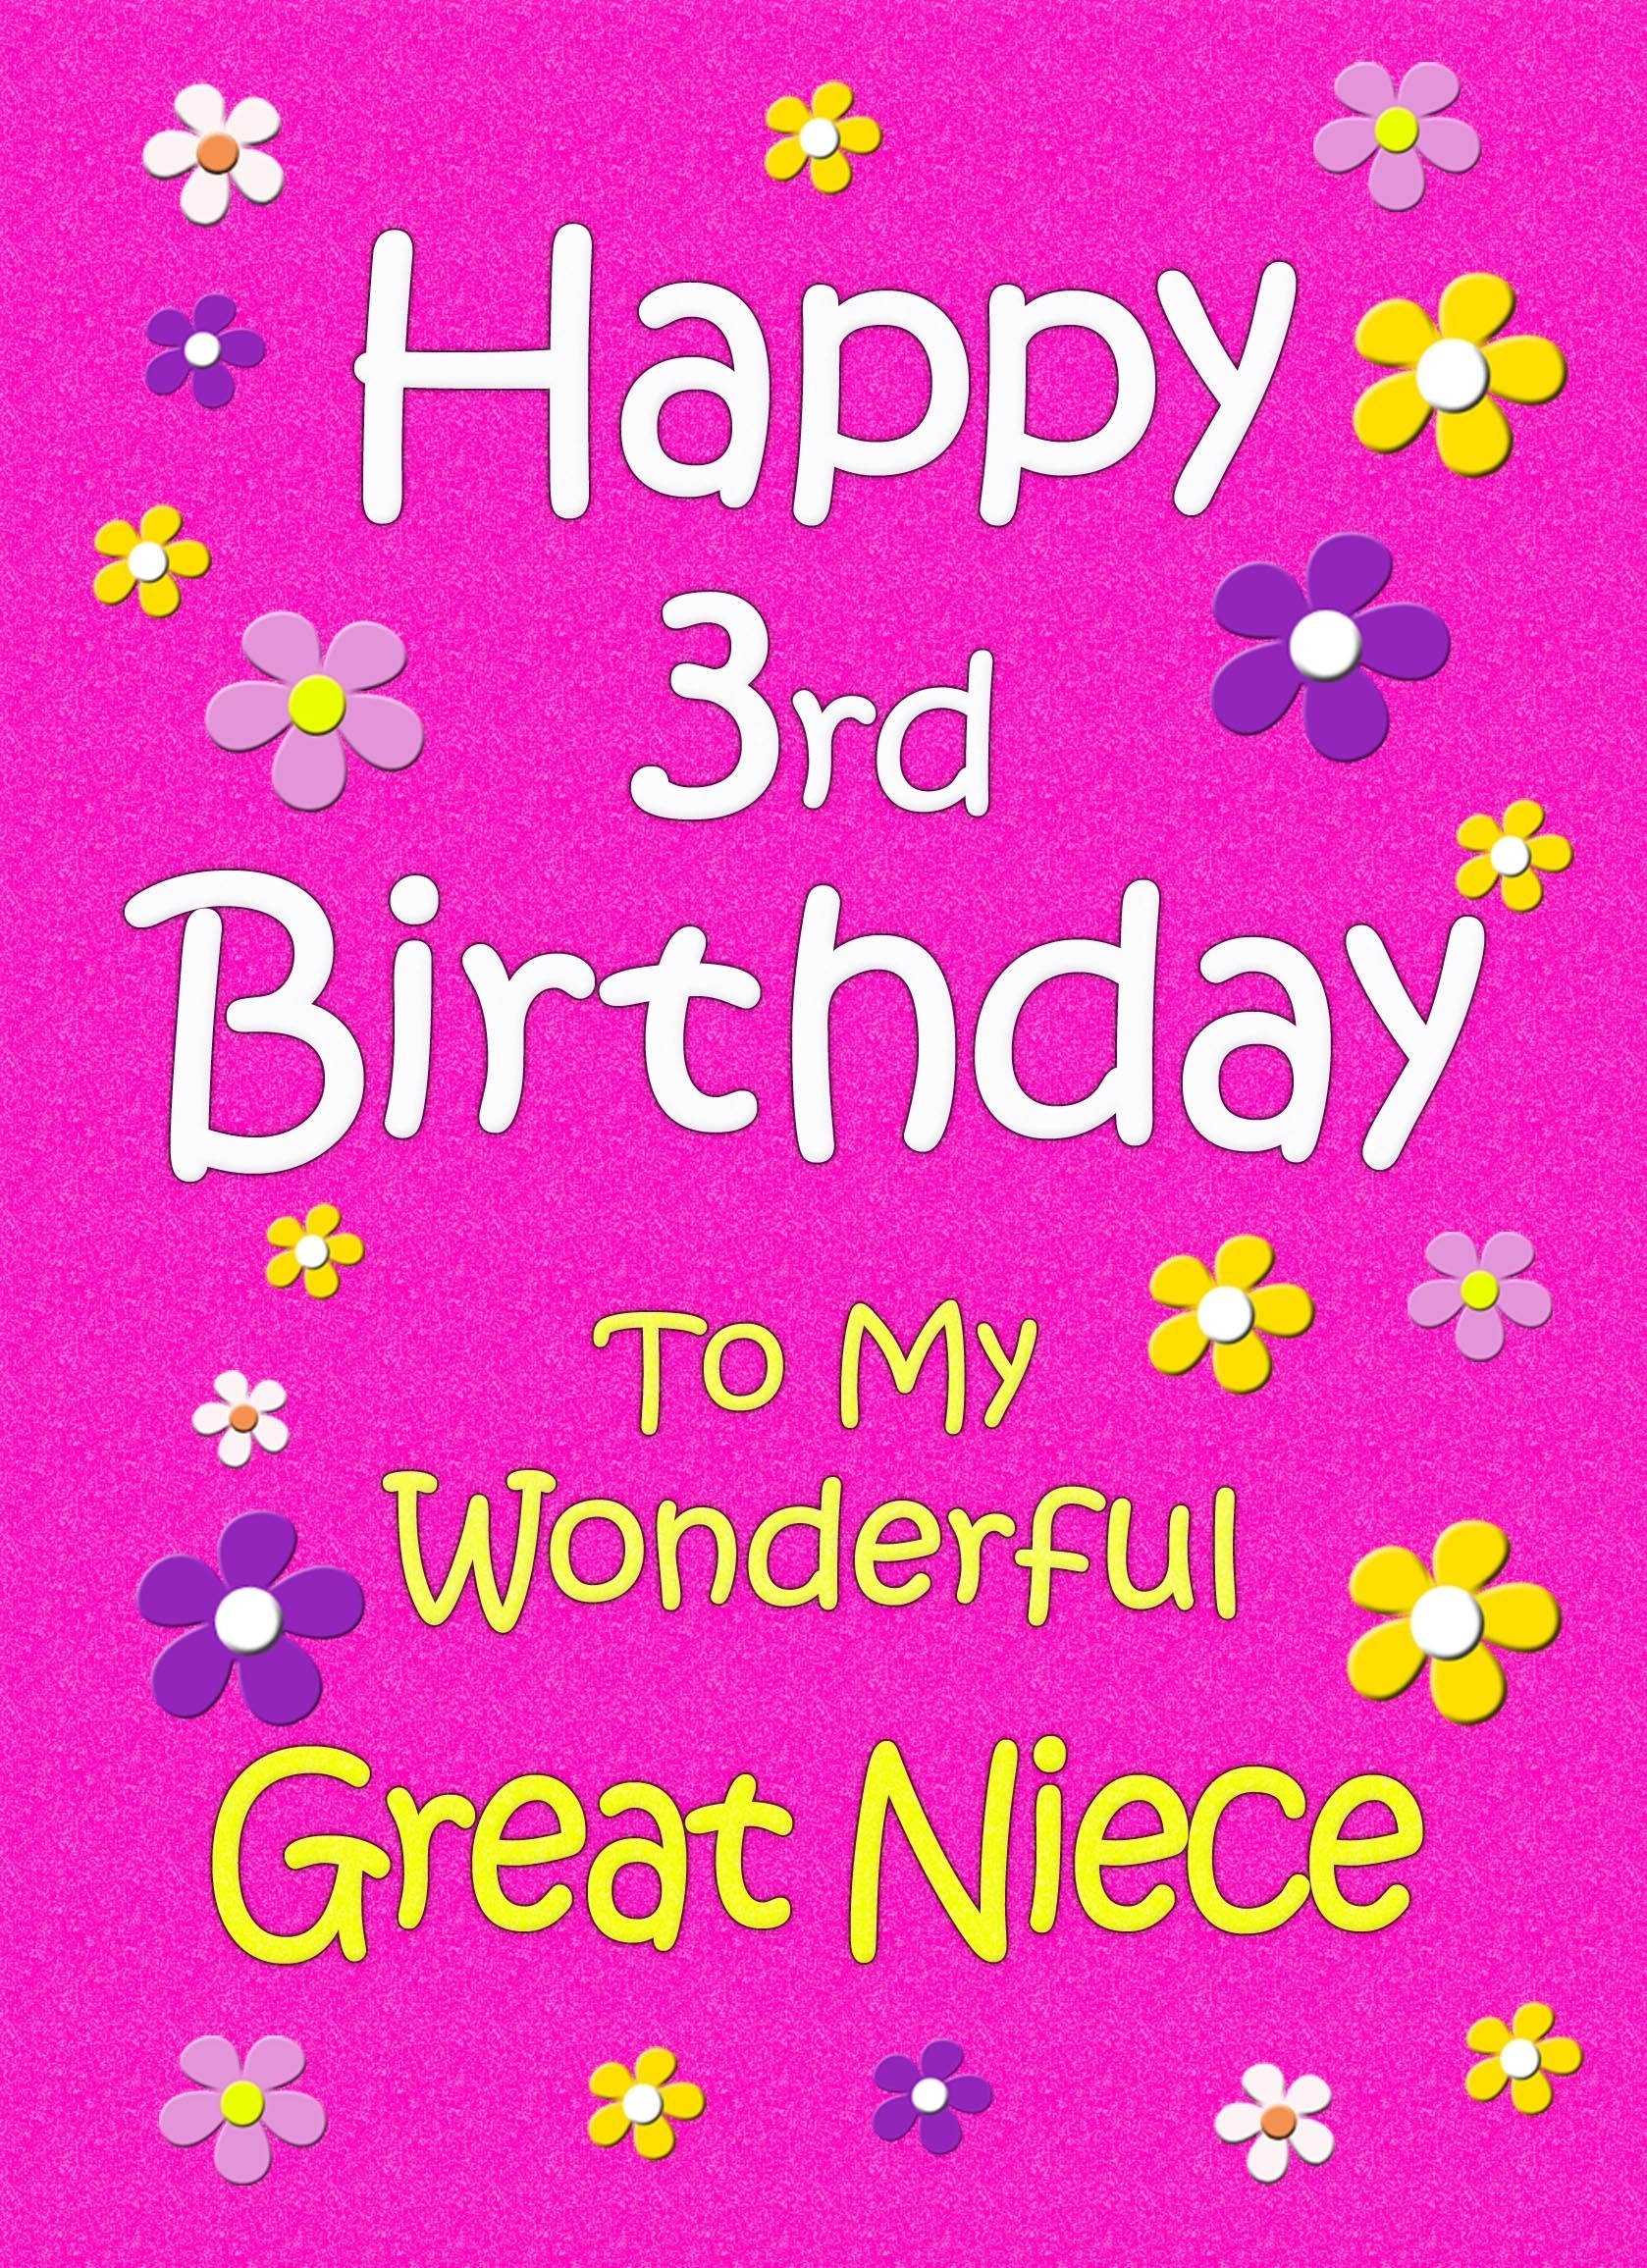 Great Niece 3rd Birthday Card (Pink)